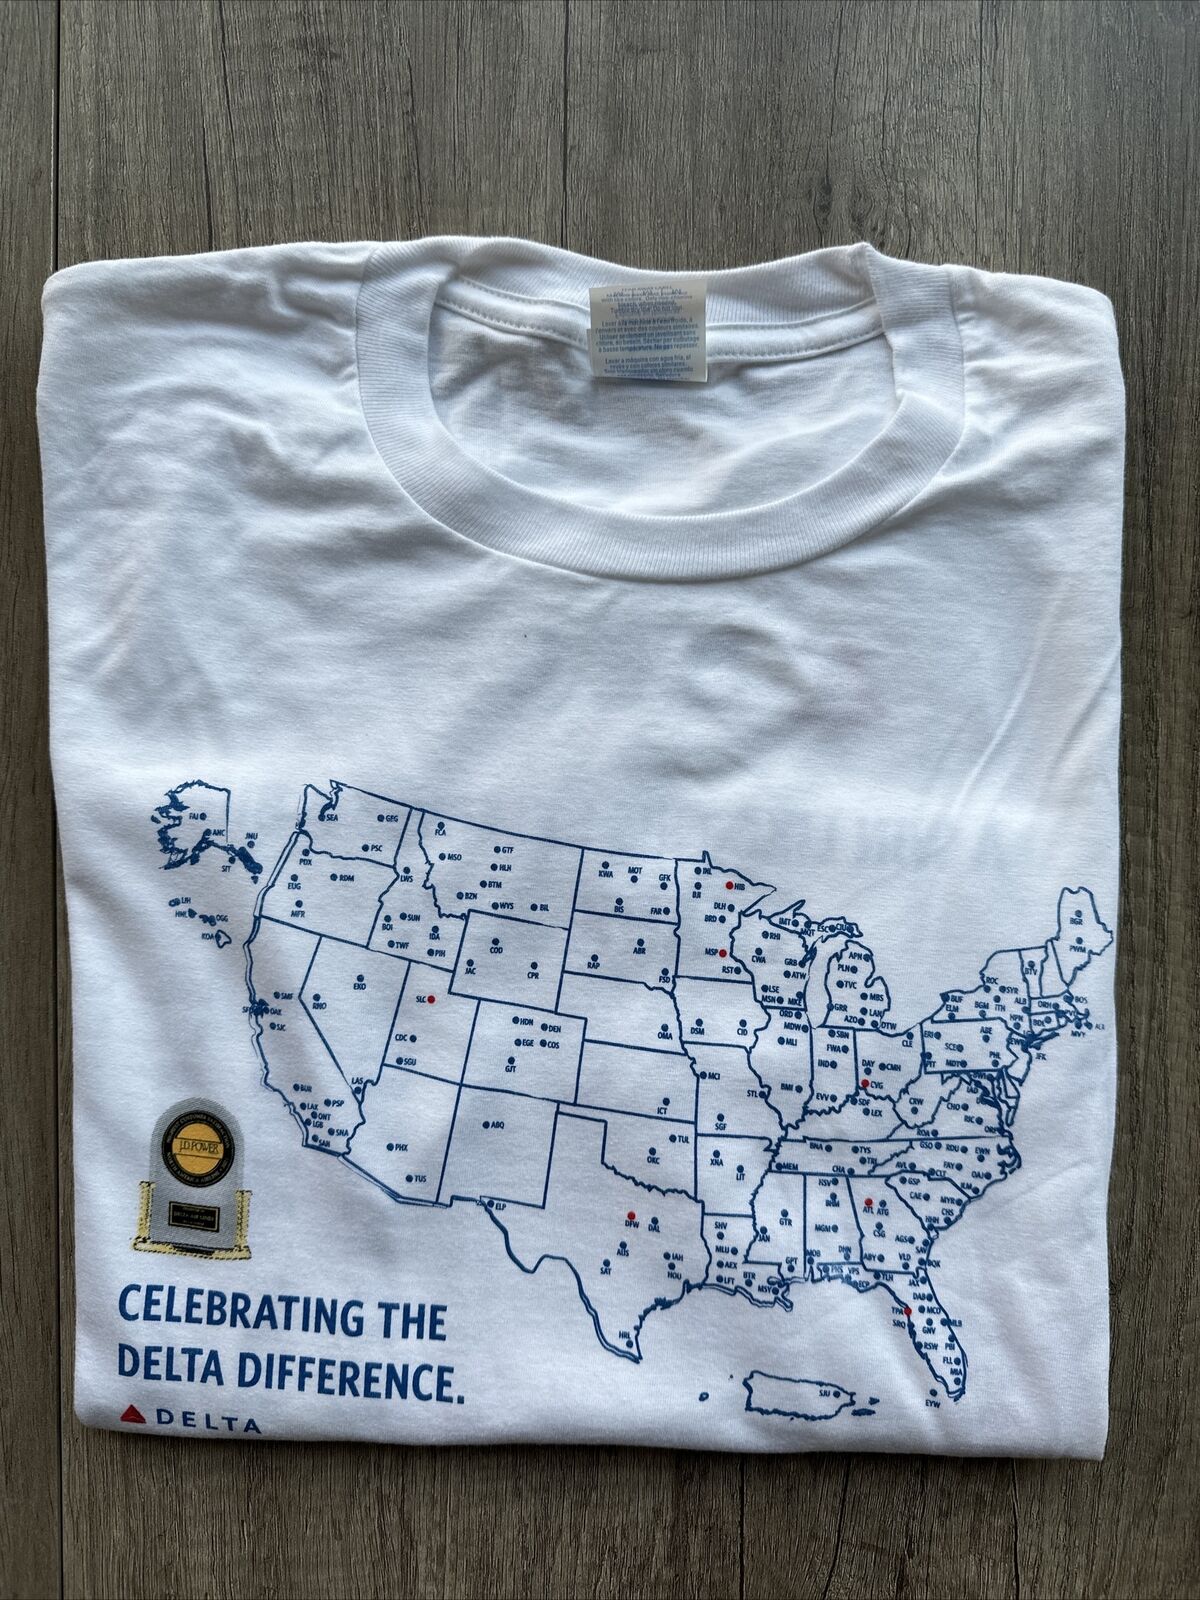 Delta Air Lines - JD Power Award / US Network Map T-Shirt (Adult Medium)